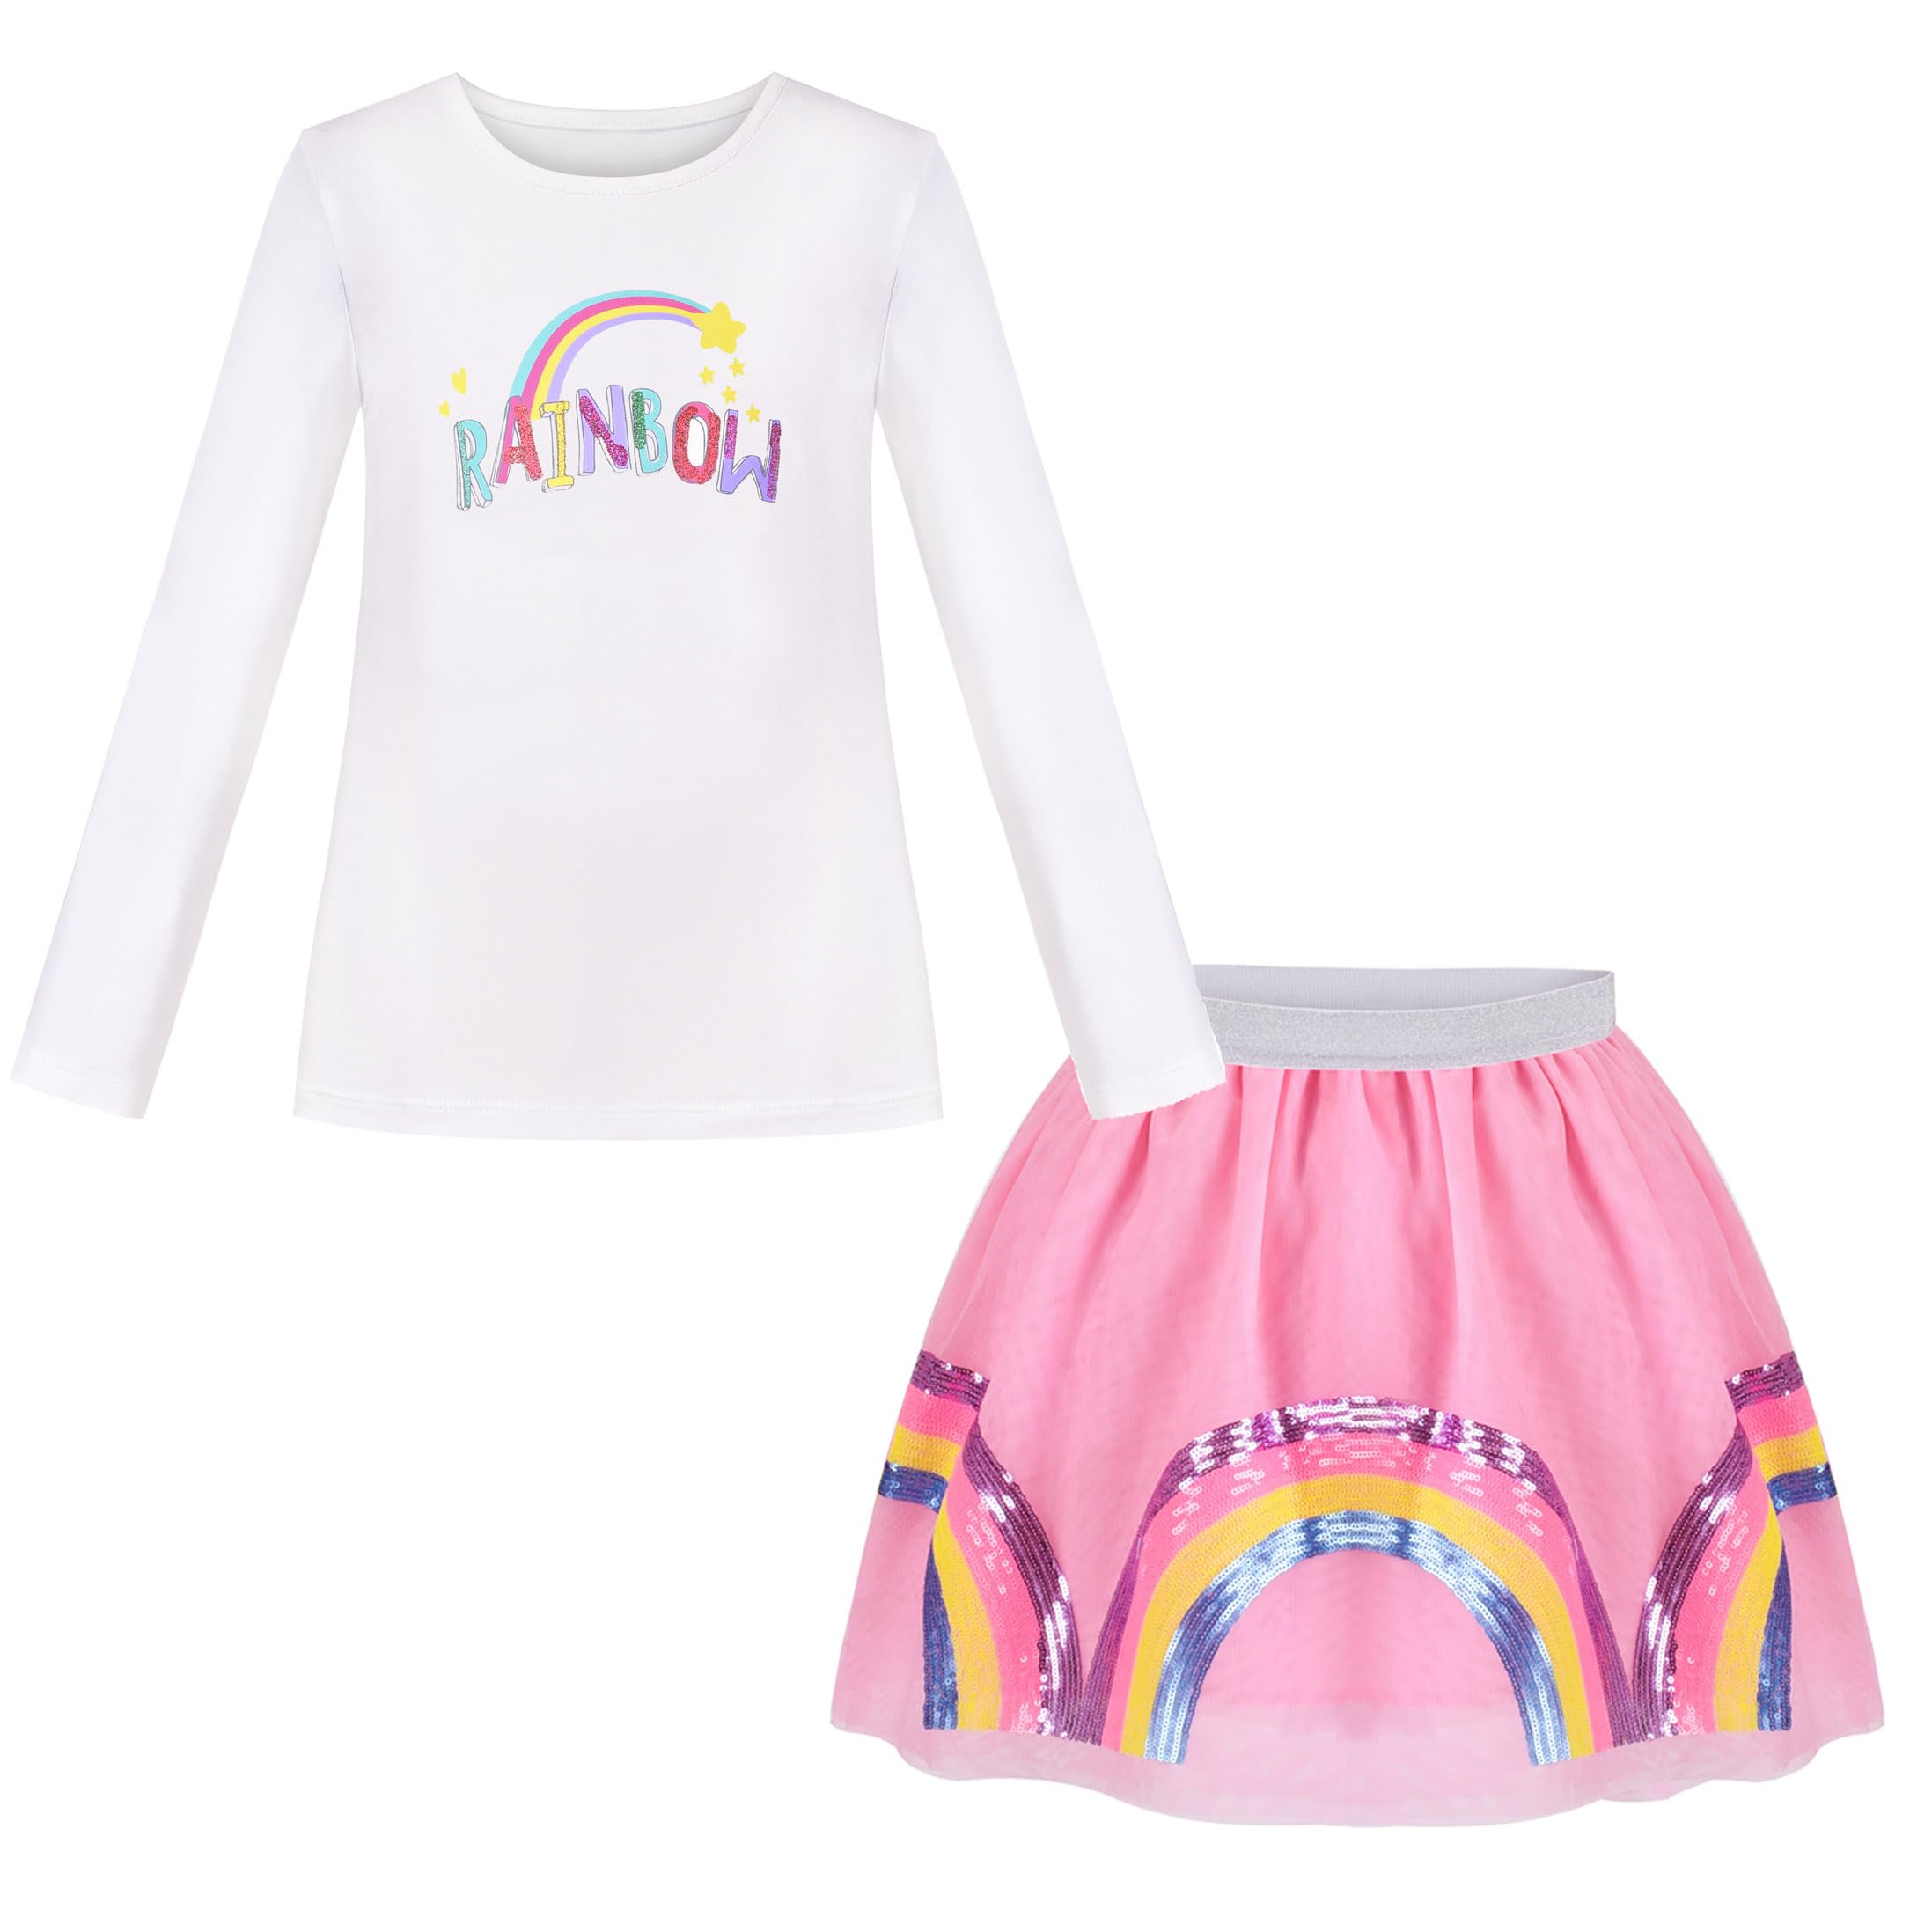 Girls White Long Sleeve Tshirt Rainbow Sequin Sparkling Tutu Skirt 2PCS Sets